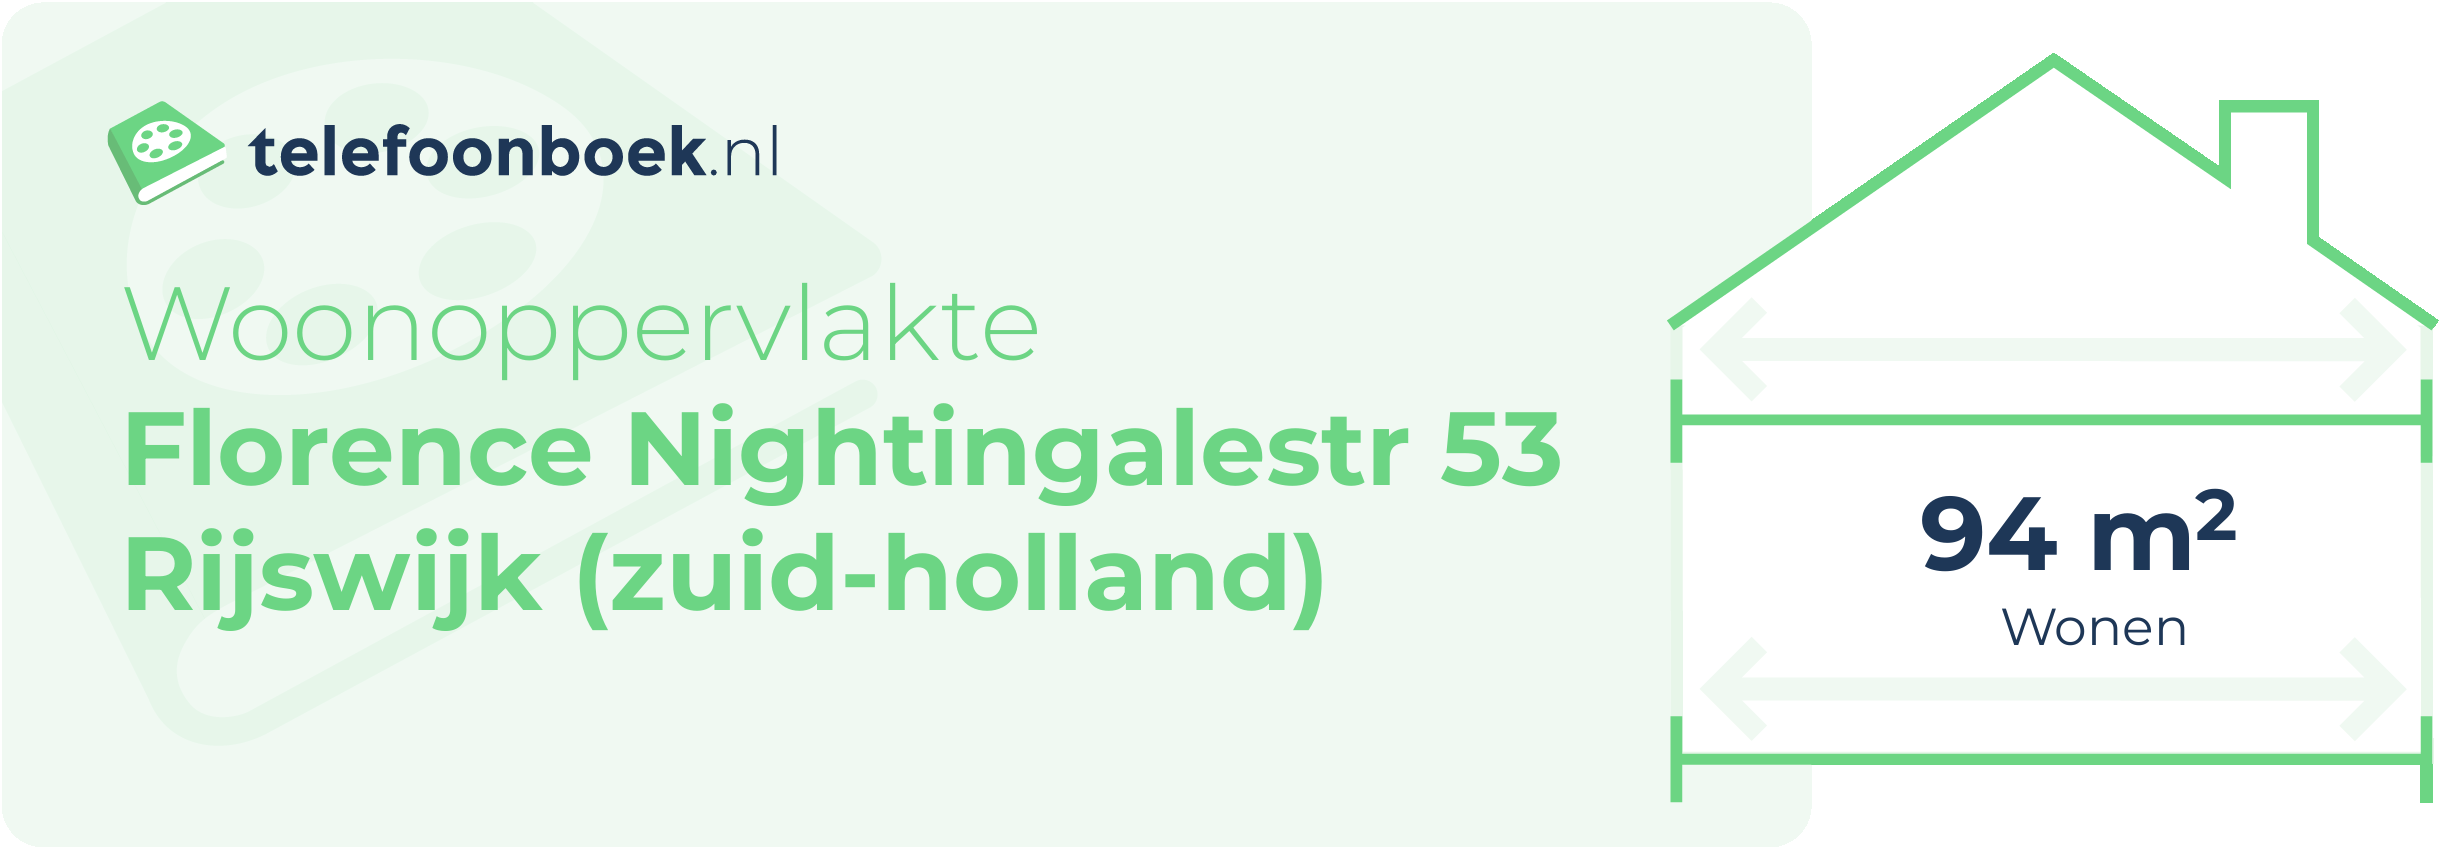 Woonoppervlakte Florence Nightingalestr 53 Rijswijk (Zuid-Holland)